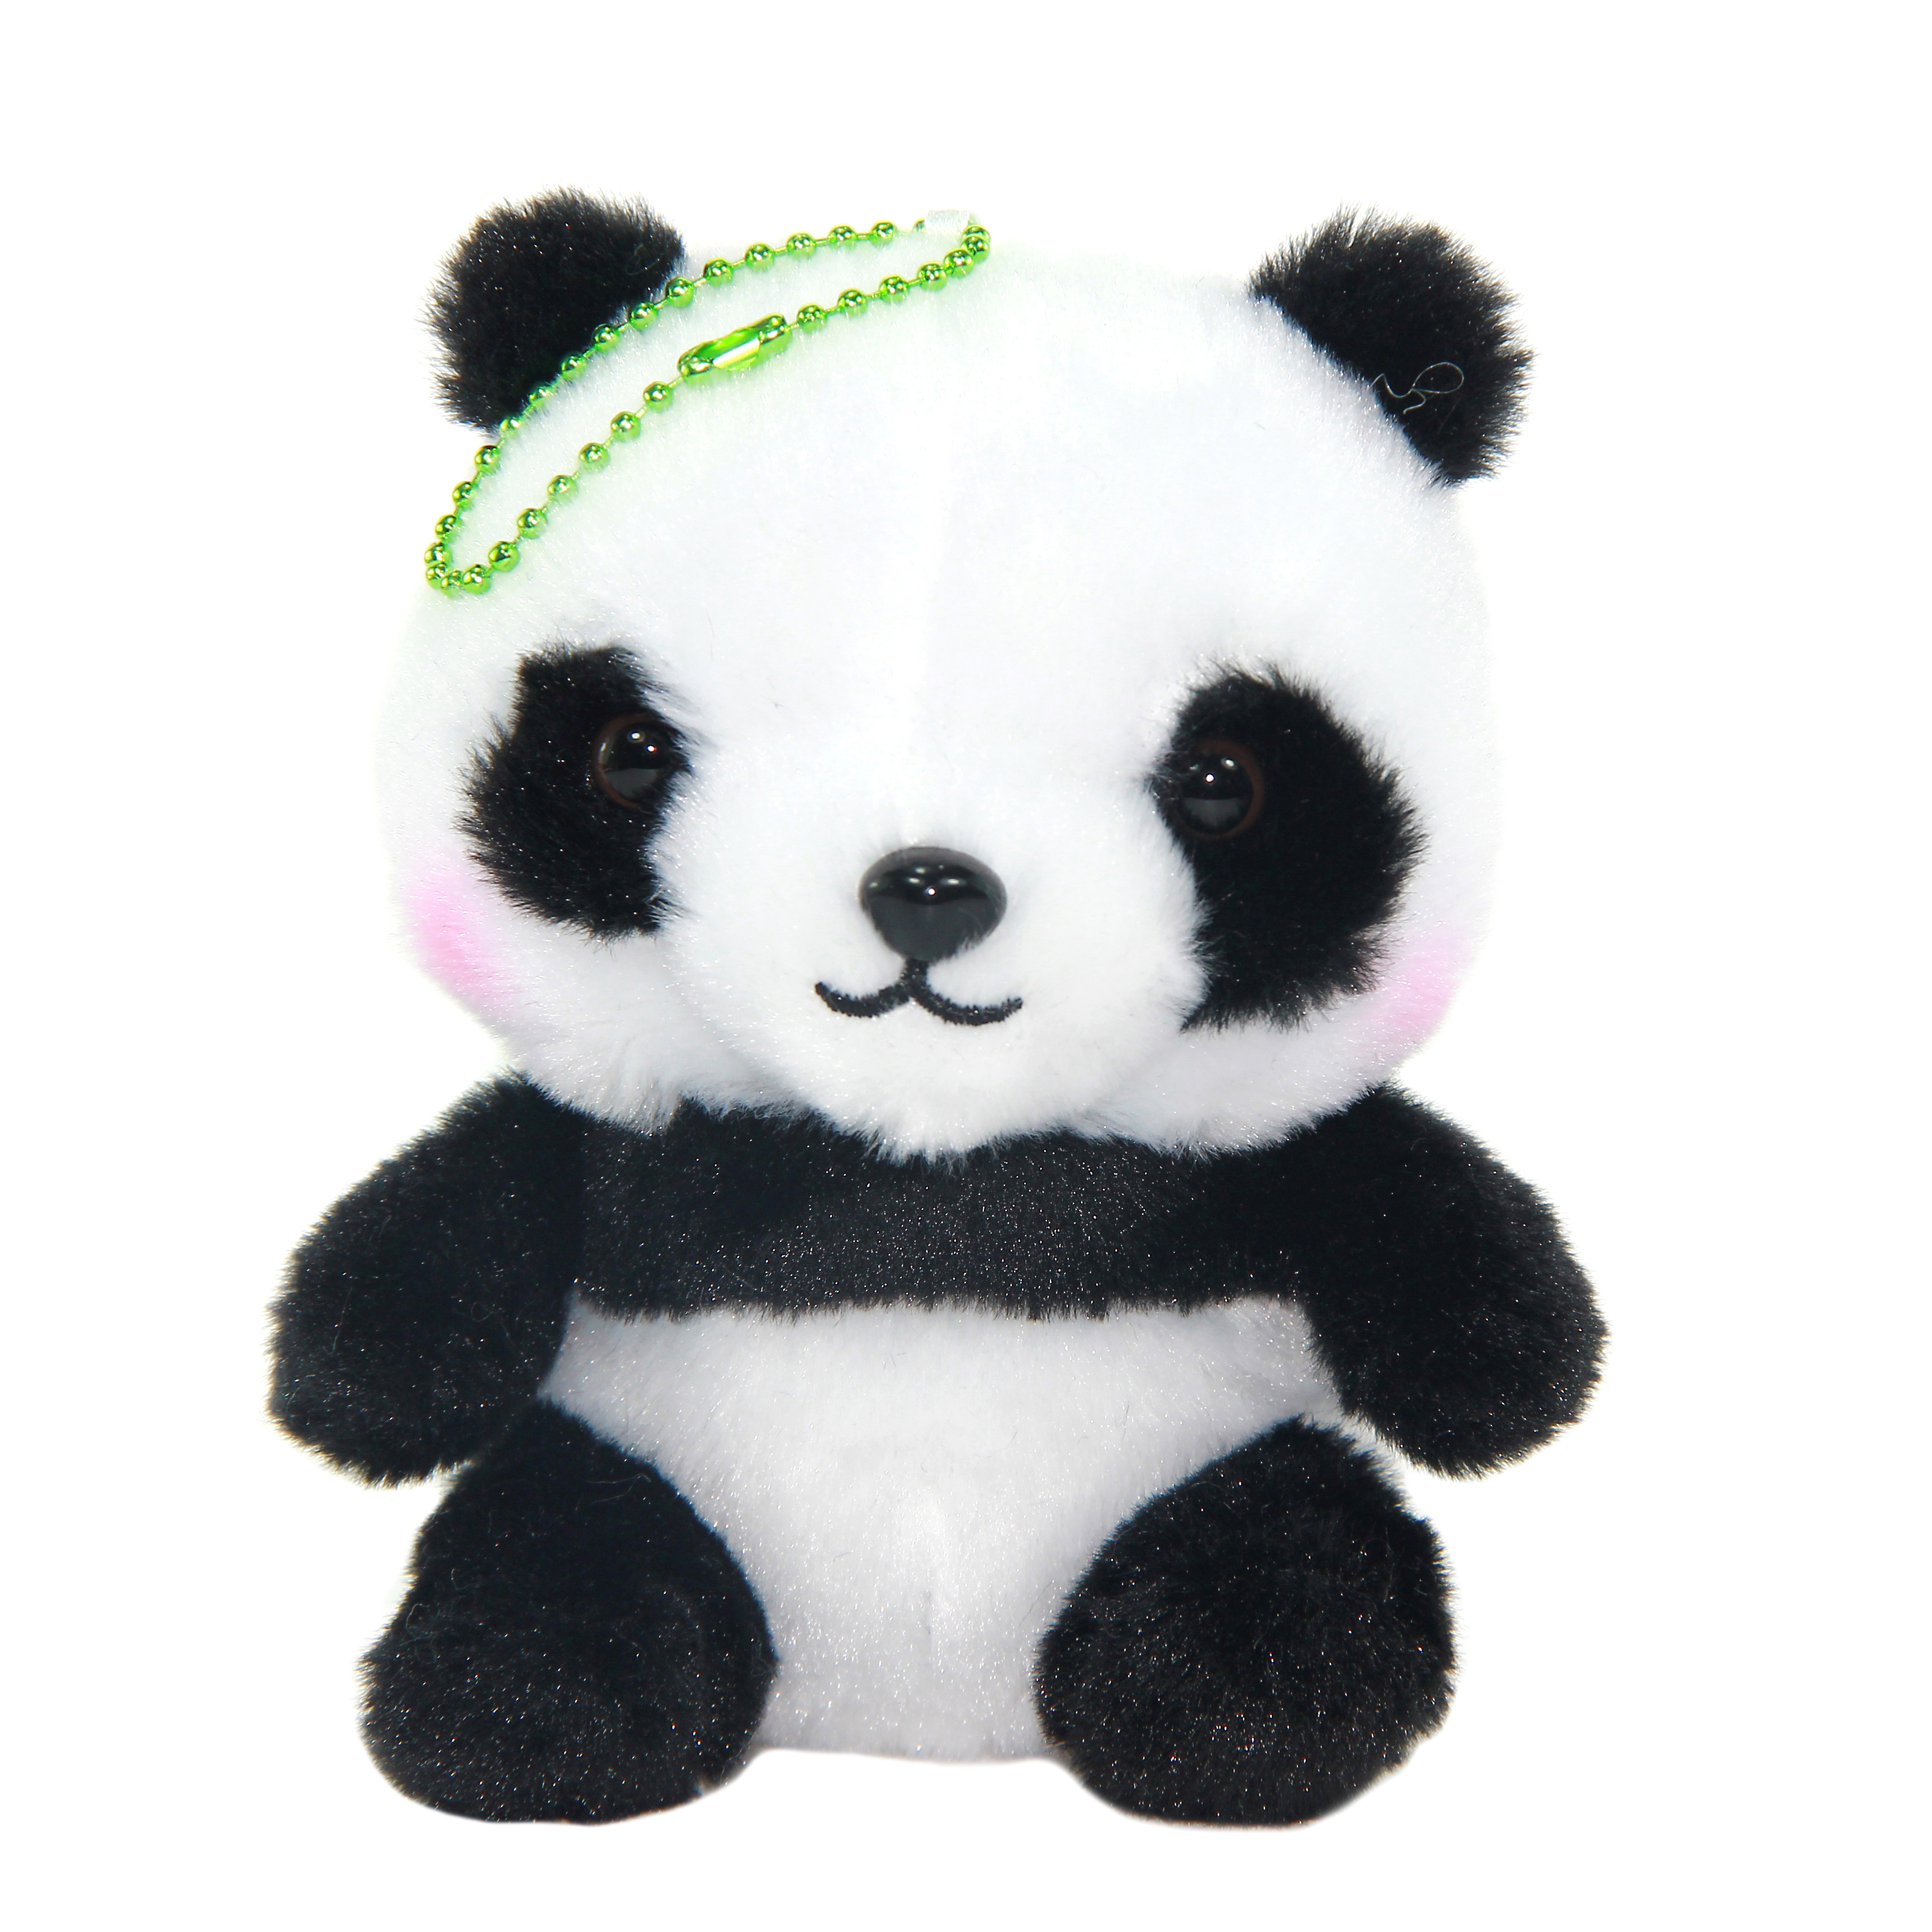 Plush Panda, Amuse, Honwaka Panda Baby, Panda Boy, Black / White, 5 Inches